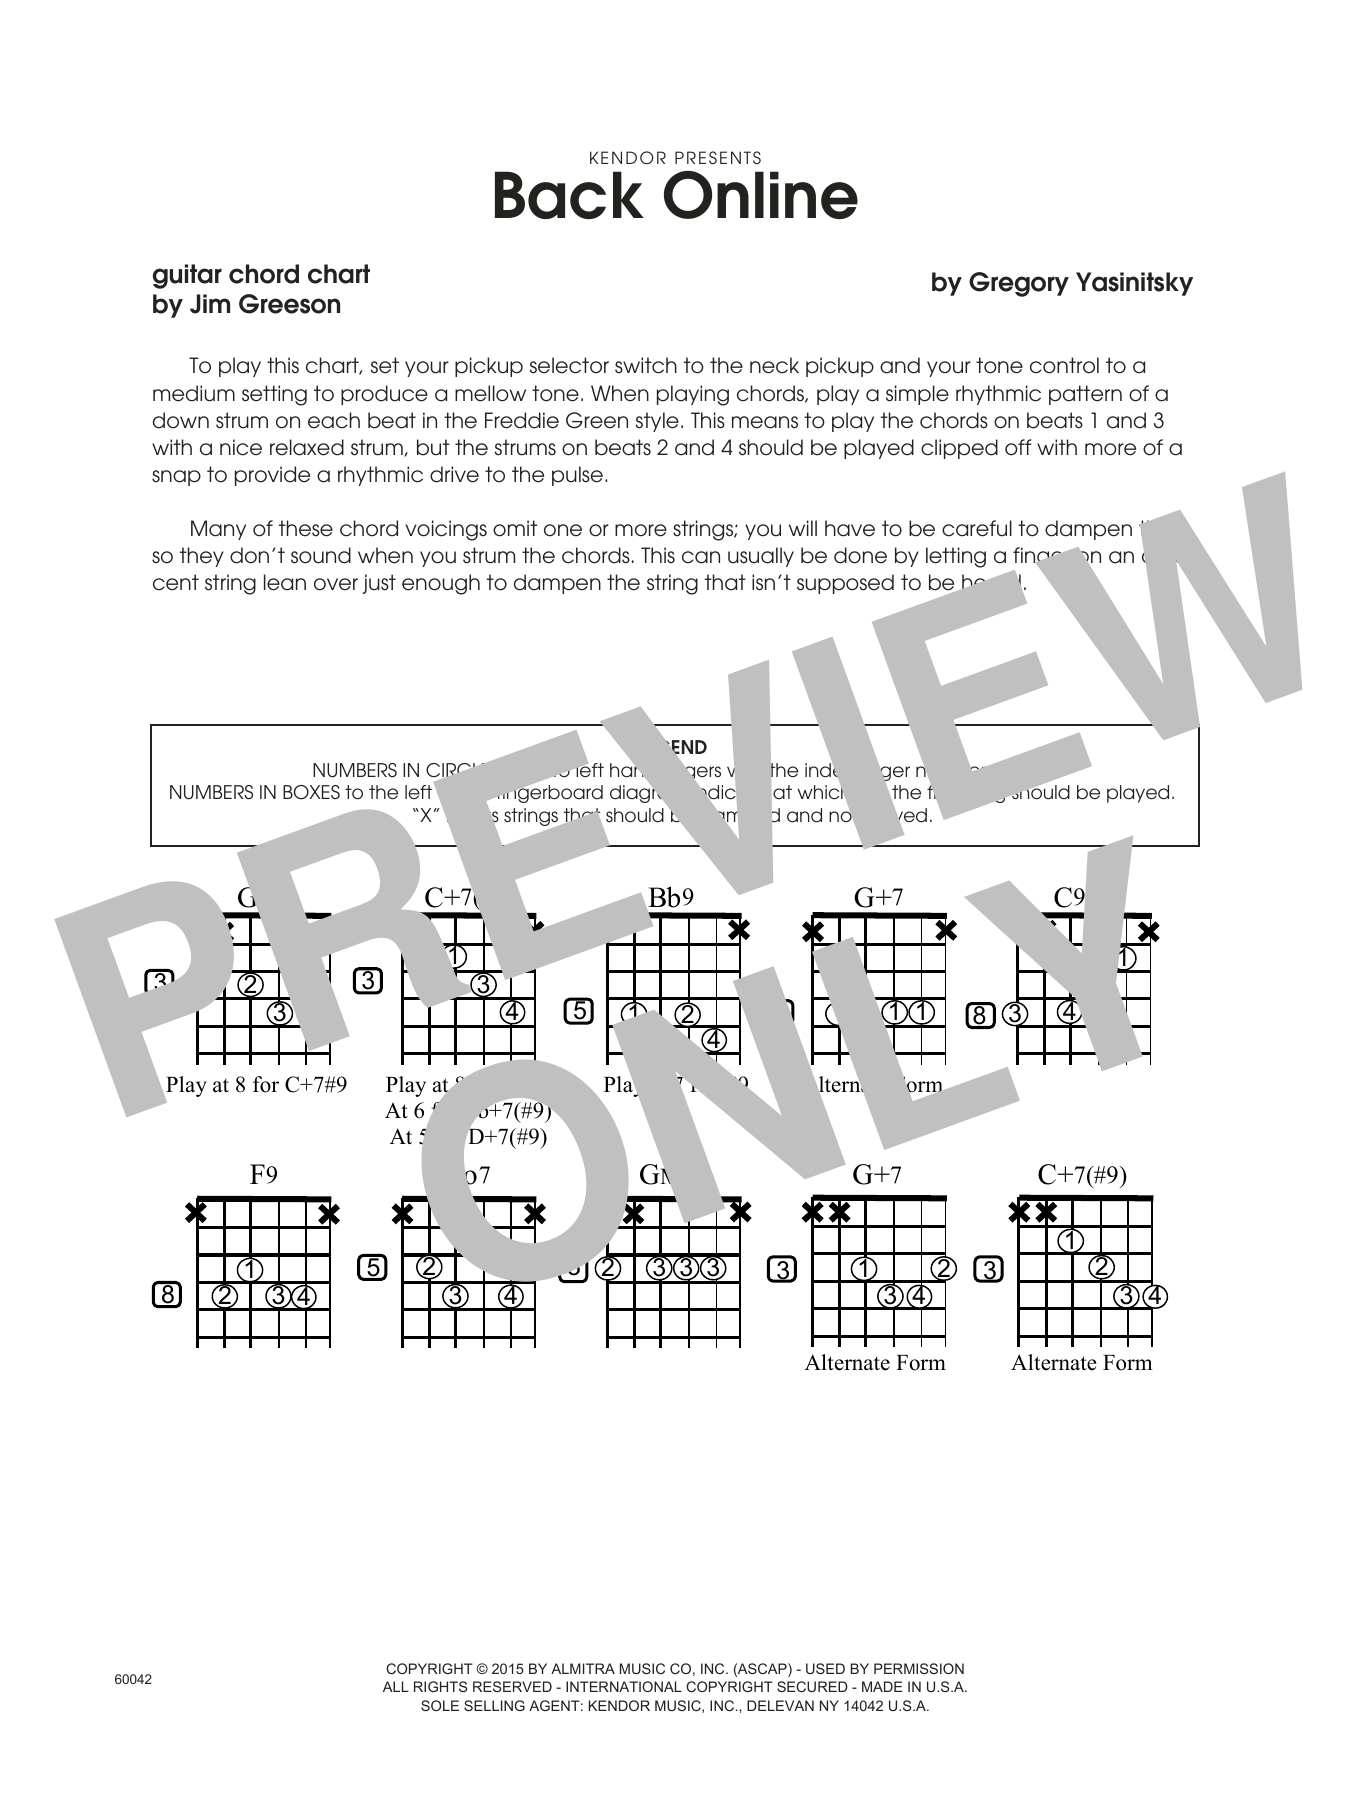 Download Gregory Yasinitsky Back Online - Guitar Chord Chart Sheet Music